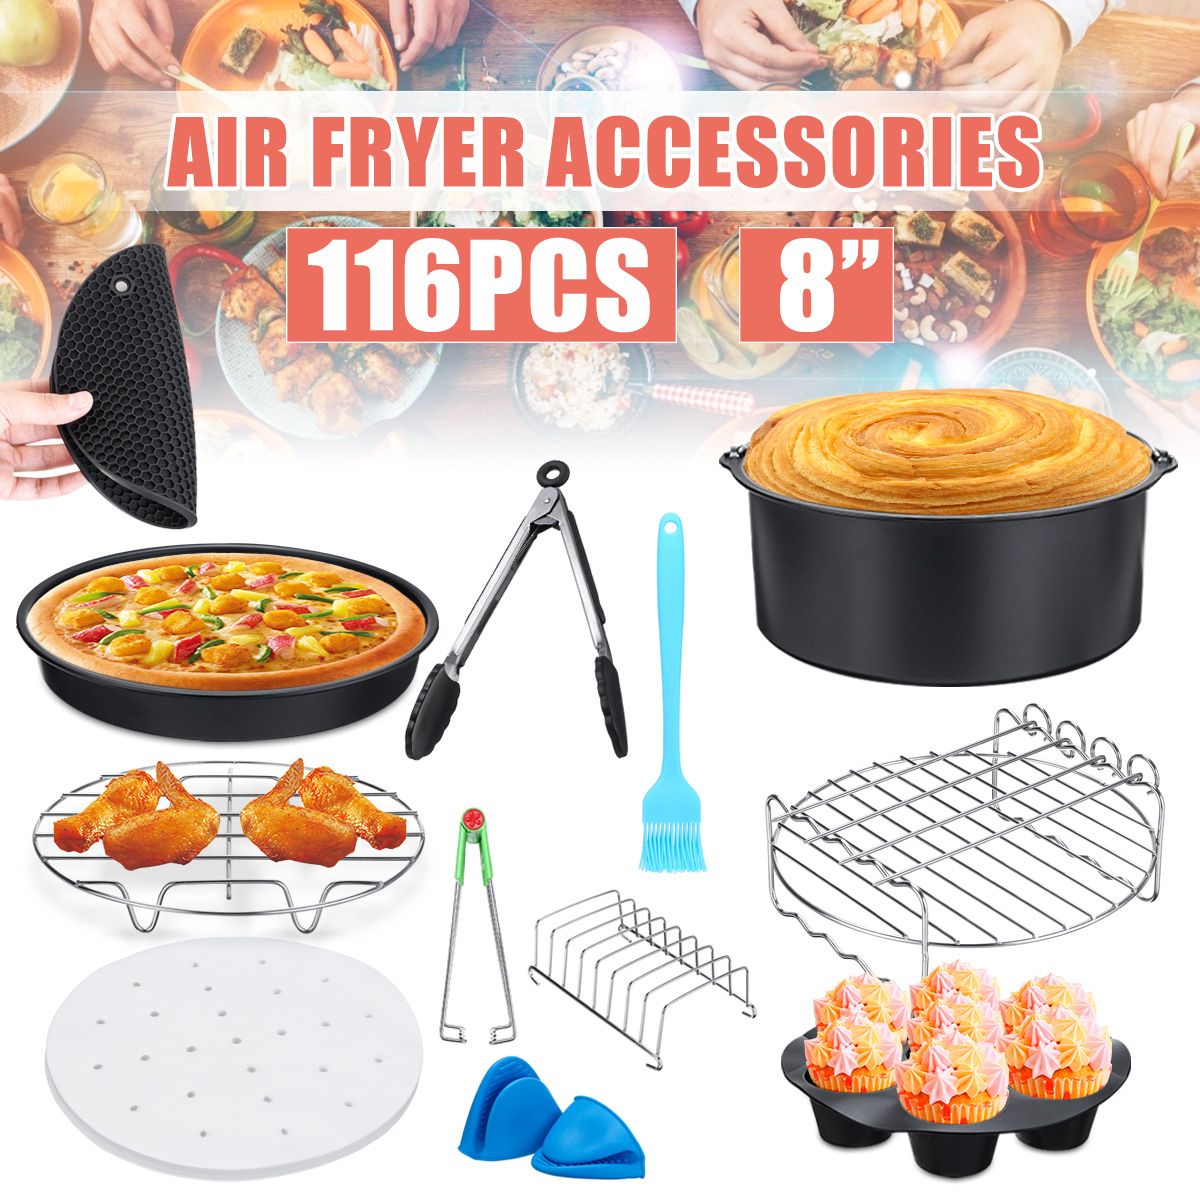 12Pcs Air Fryer Accessories 8 Inch for Air fryer 5.2 - 5.8 QT 